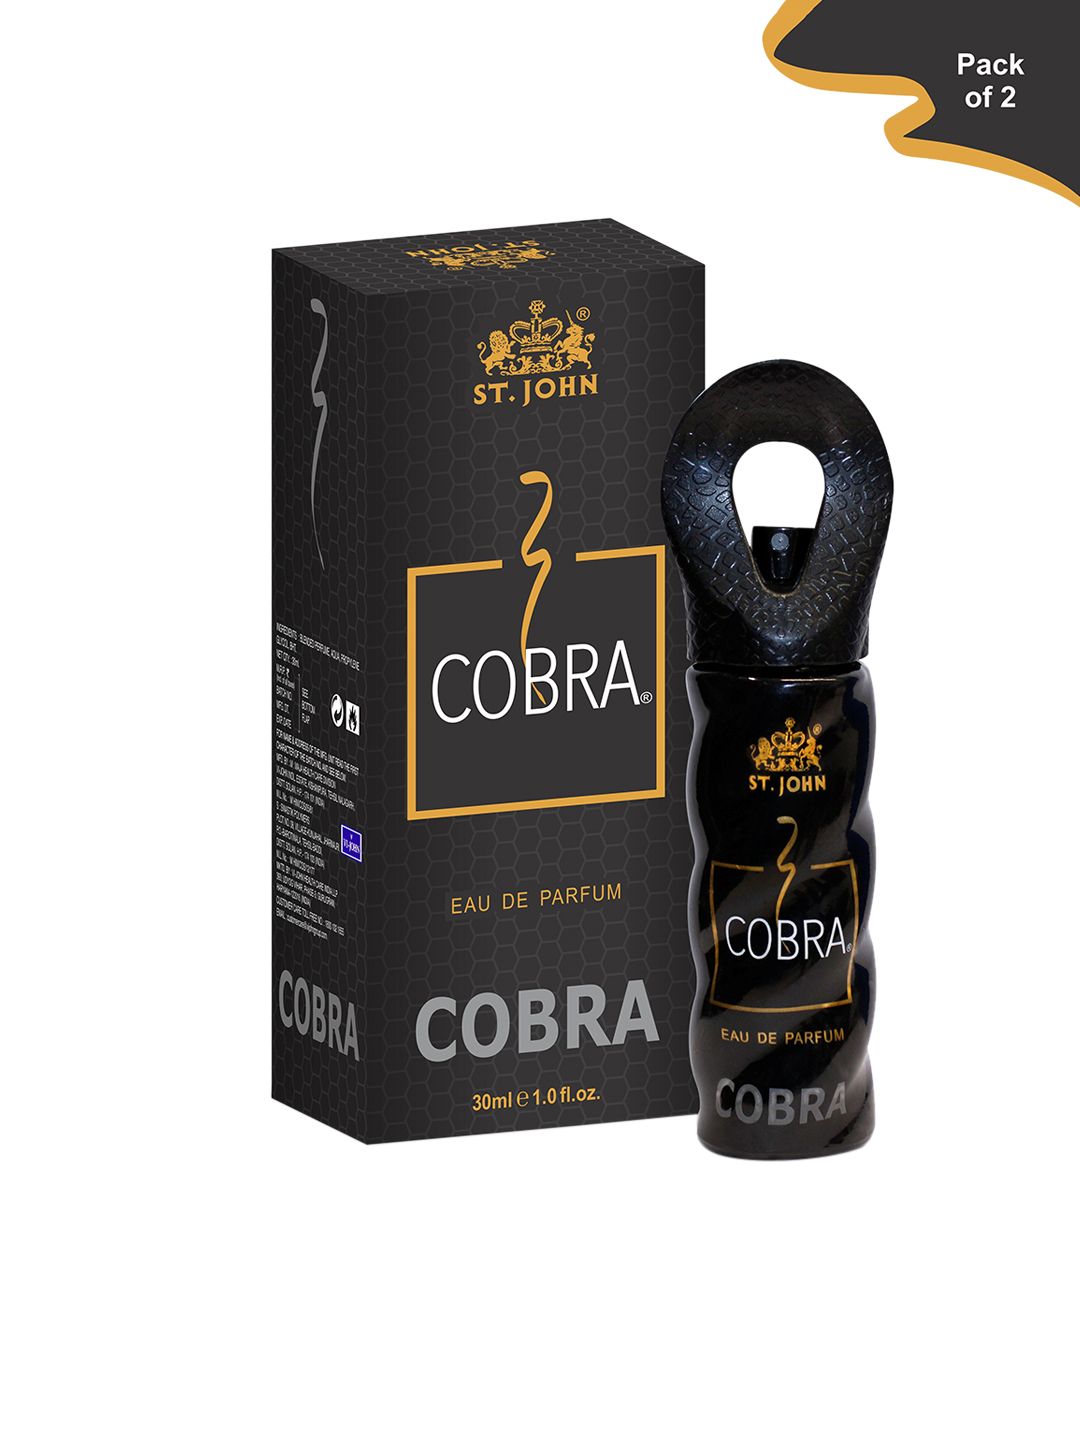 St. John Pack of 2 Cobra Perfume - 30 ml Each Price in India